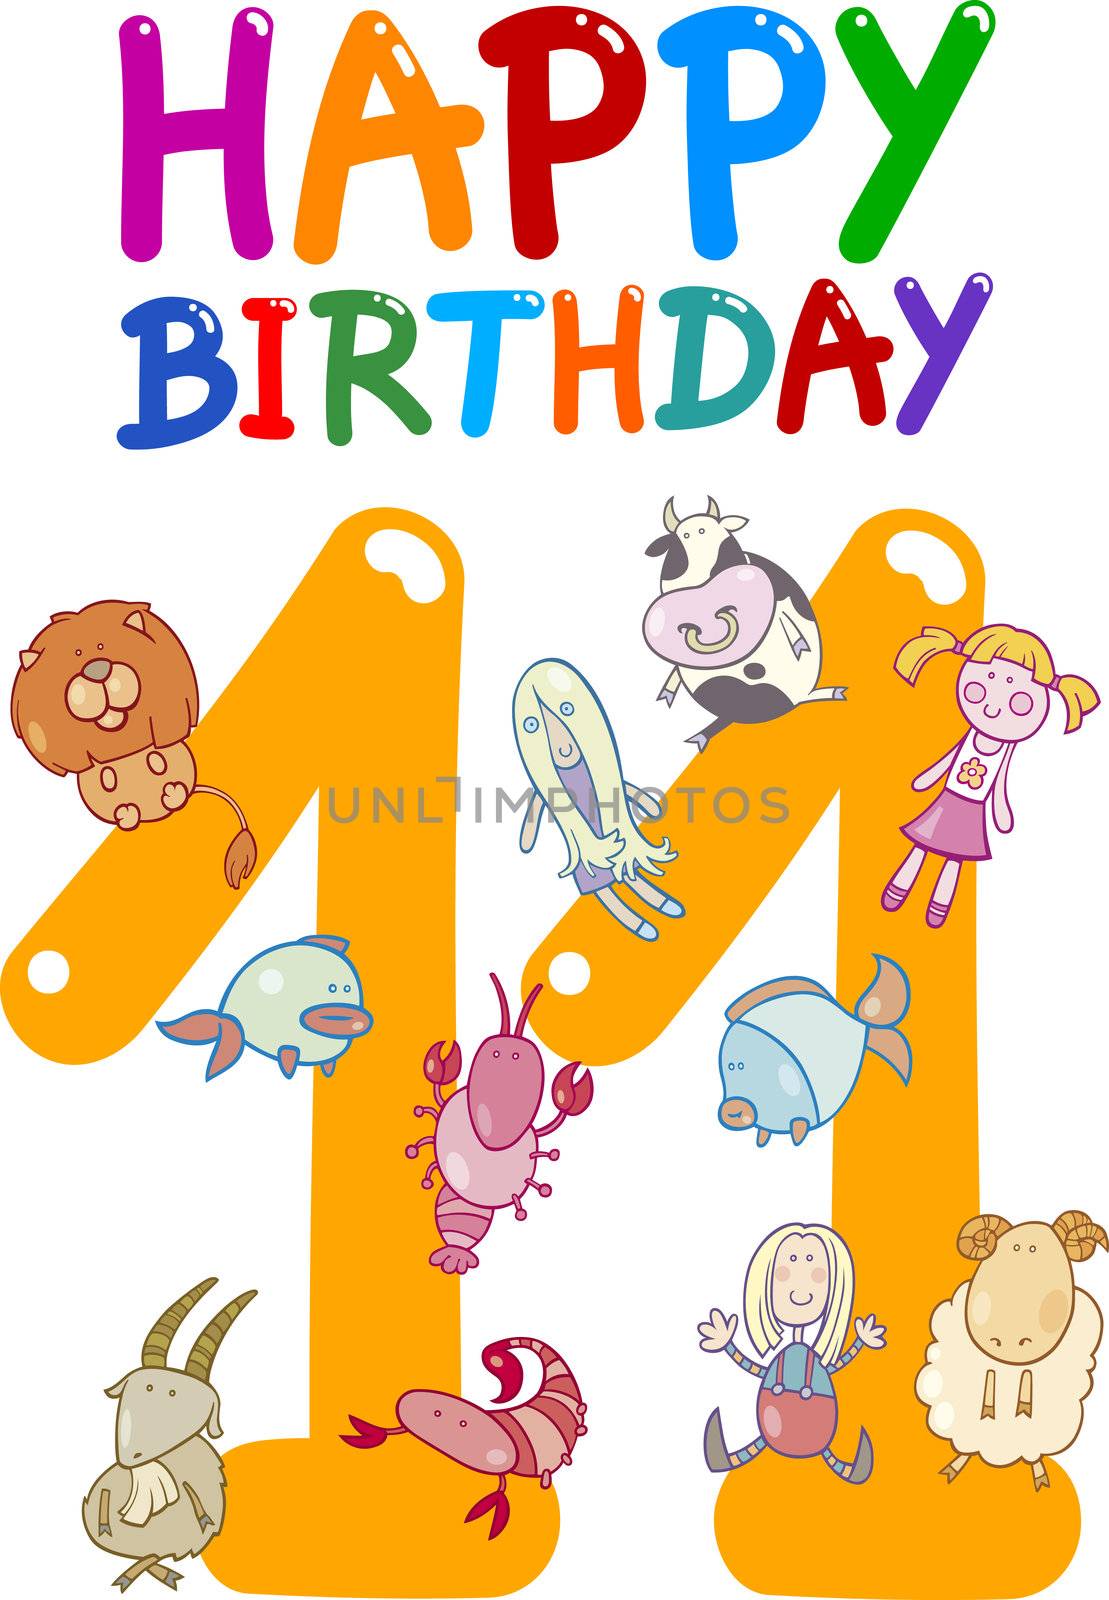 cartoon illustration design for eleventh birthday anniversary